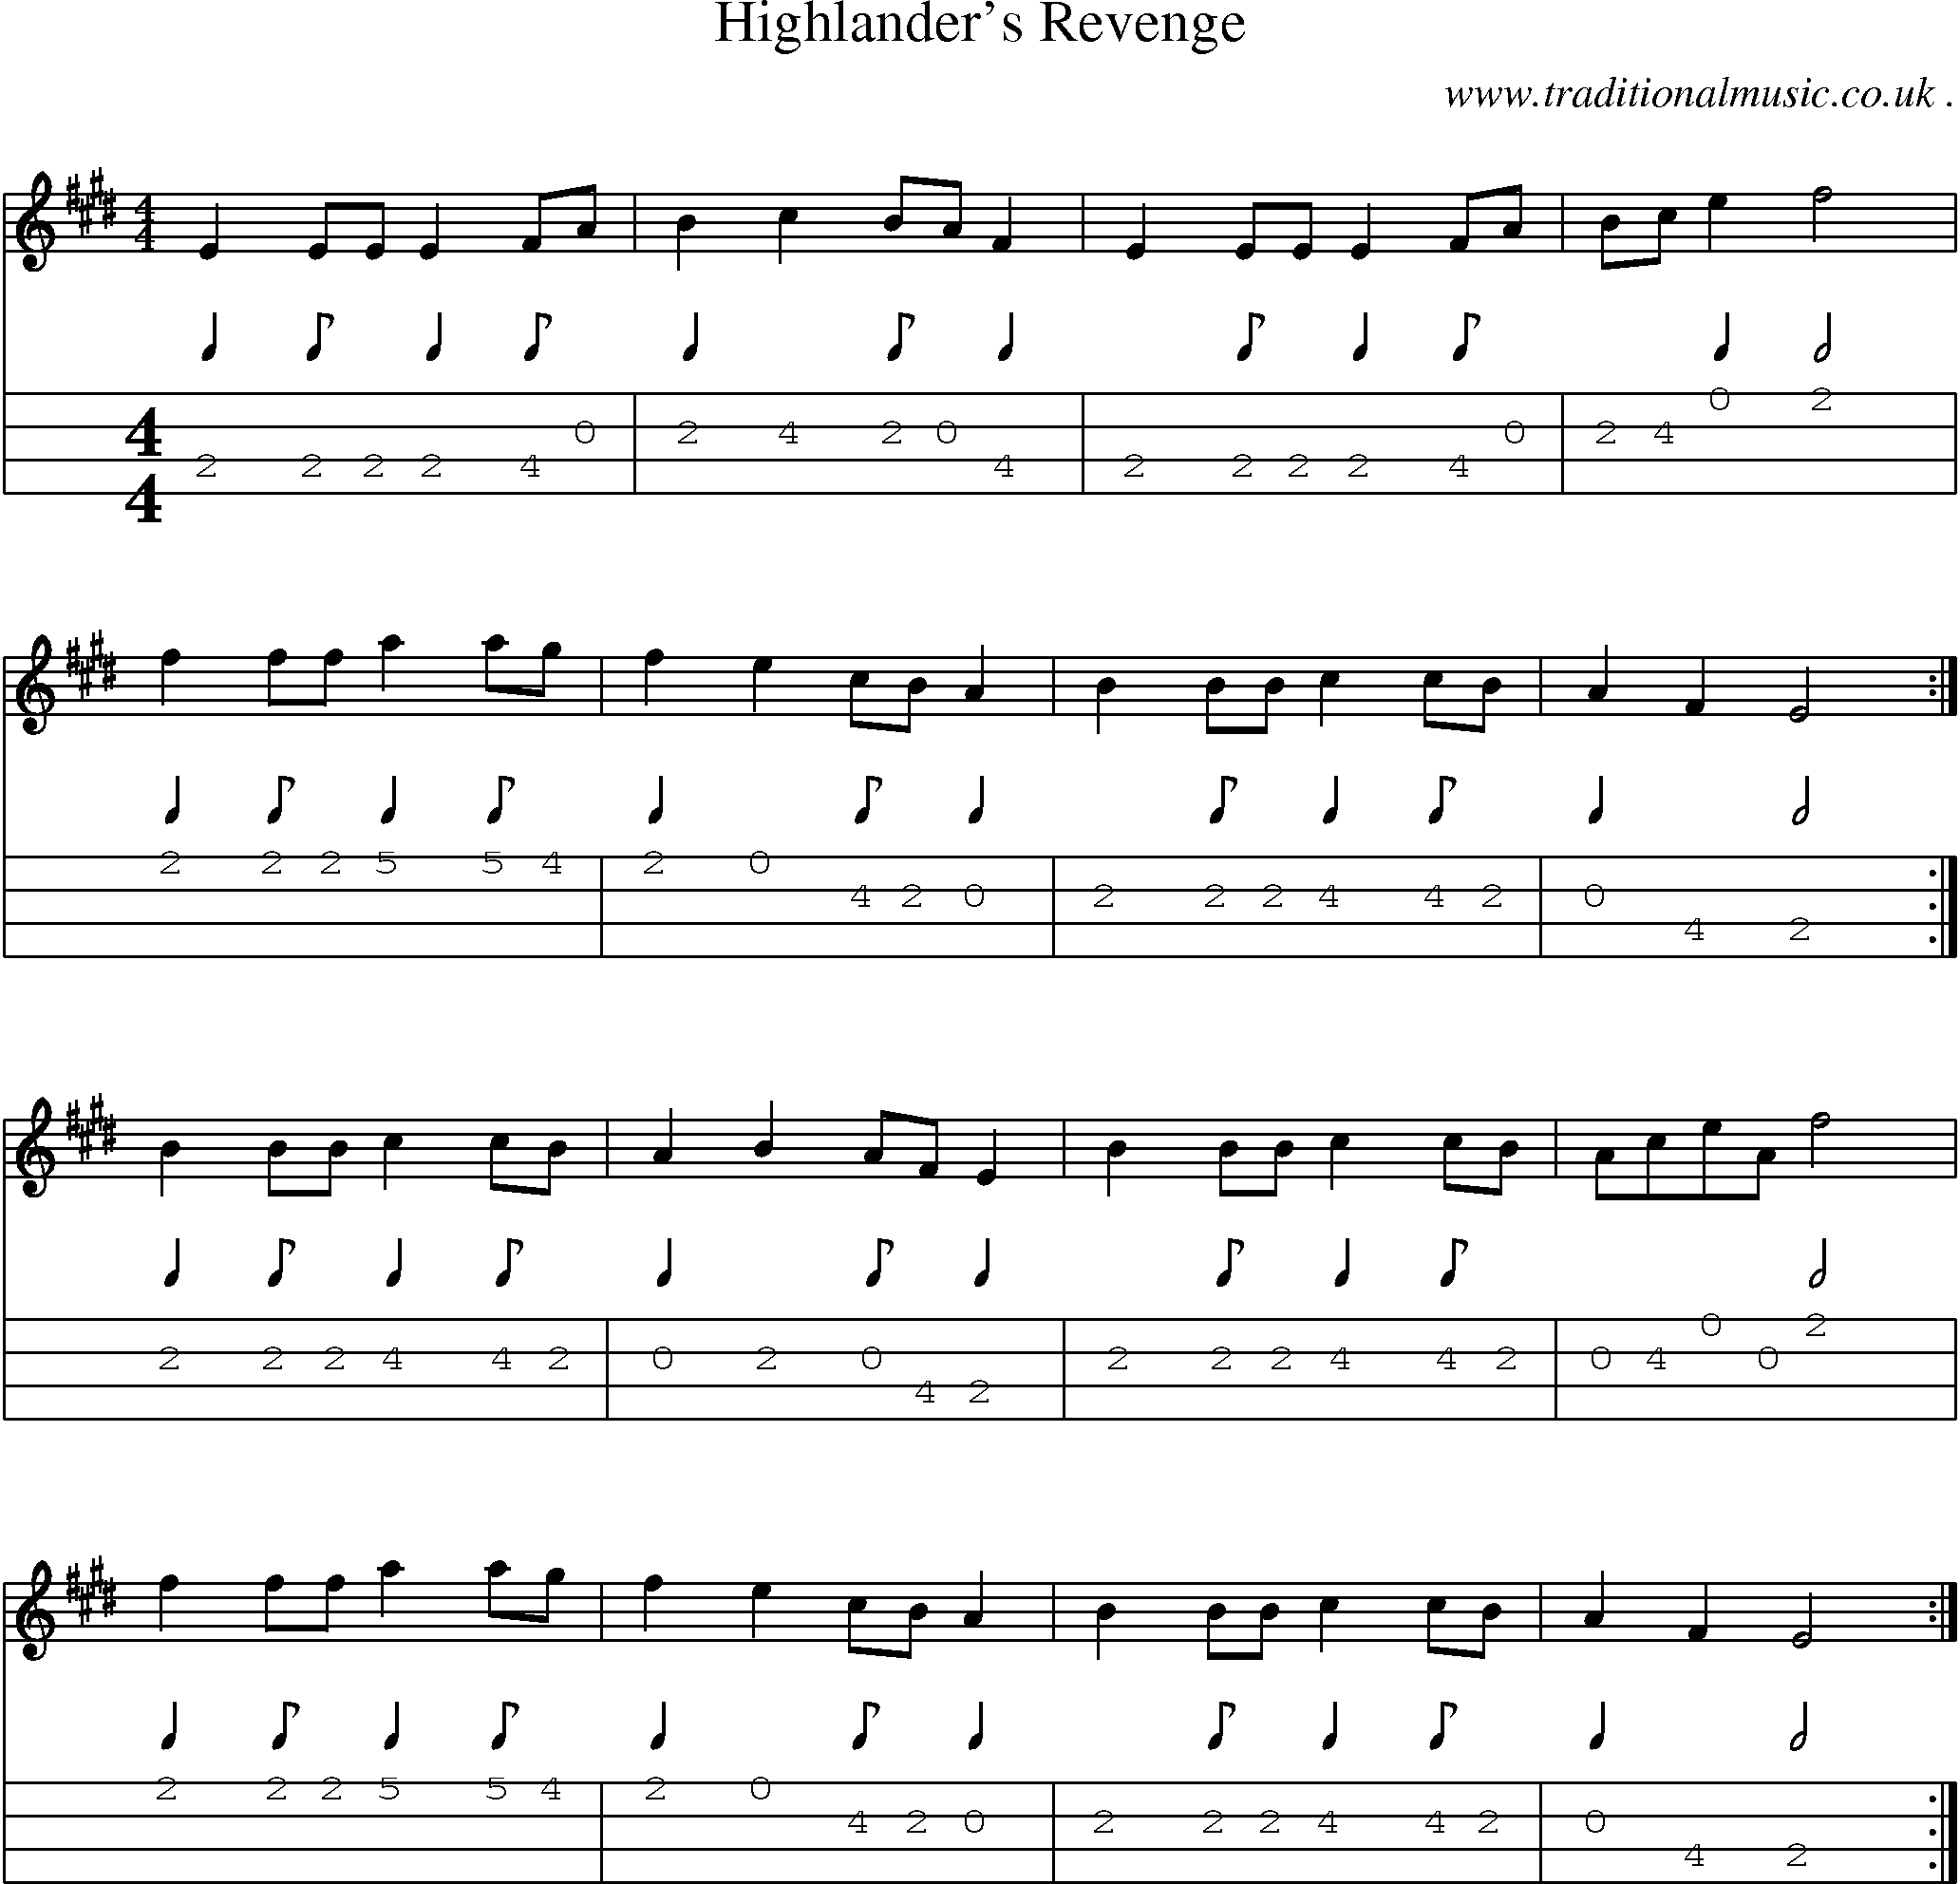 Sheet-music  score, Chords and Mandolin Tabs for Highlanders Revenge